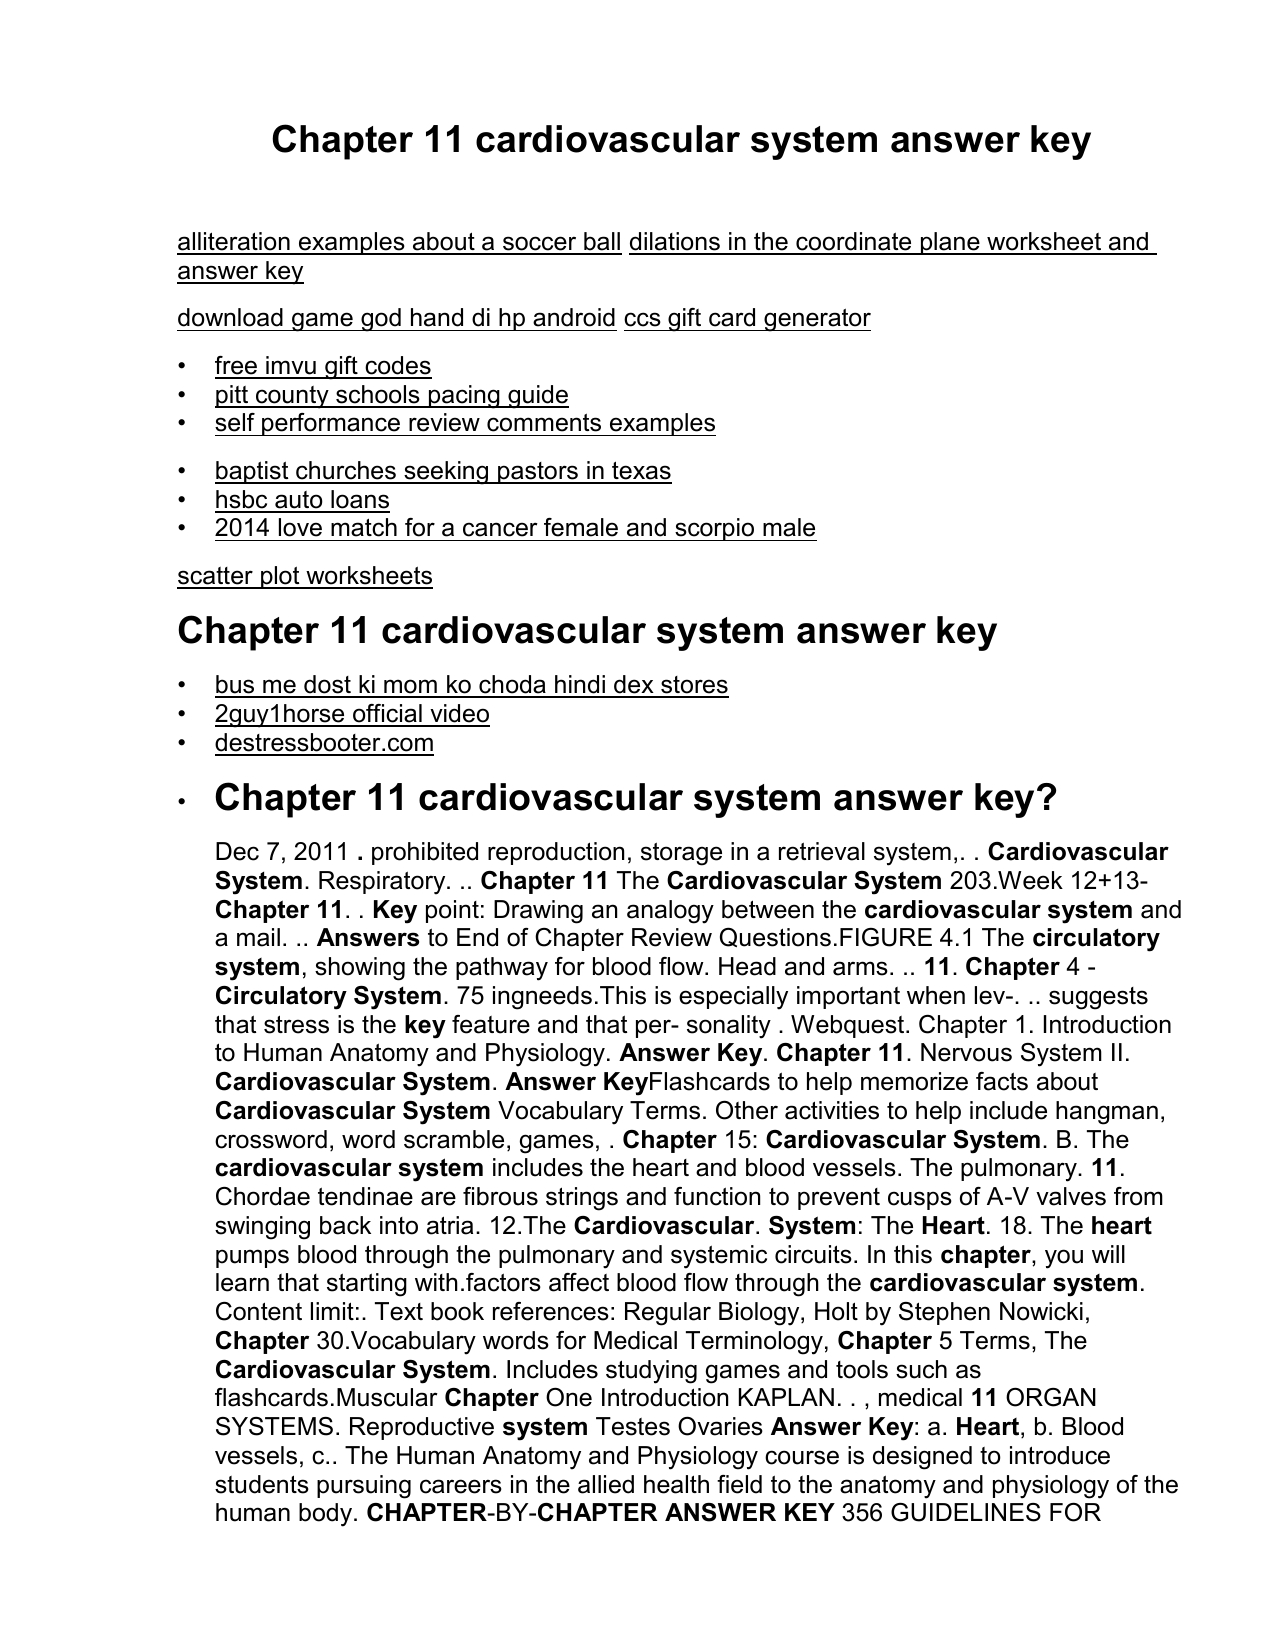 Chapter 11 Cardiovascular System Answer Key